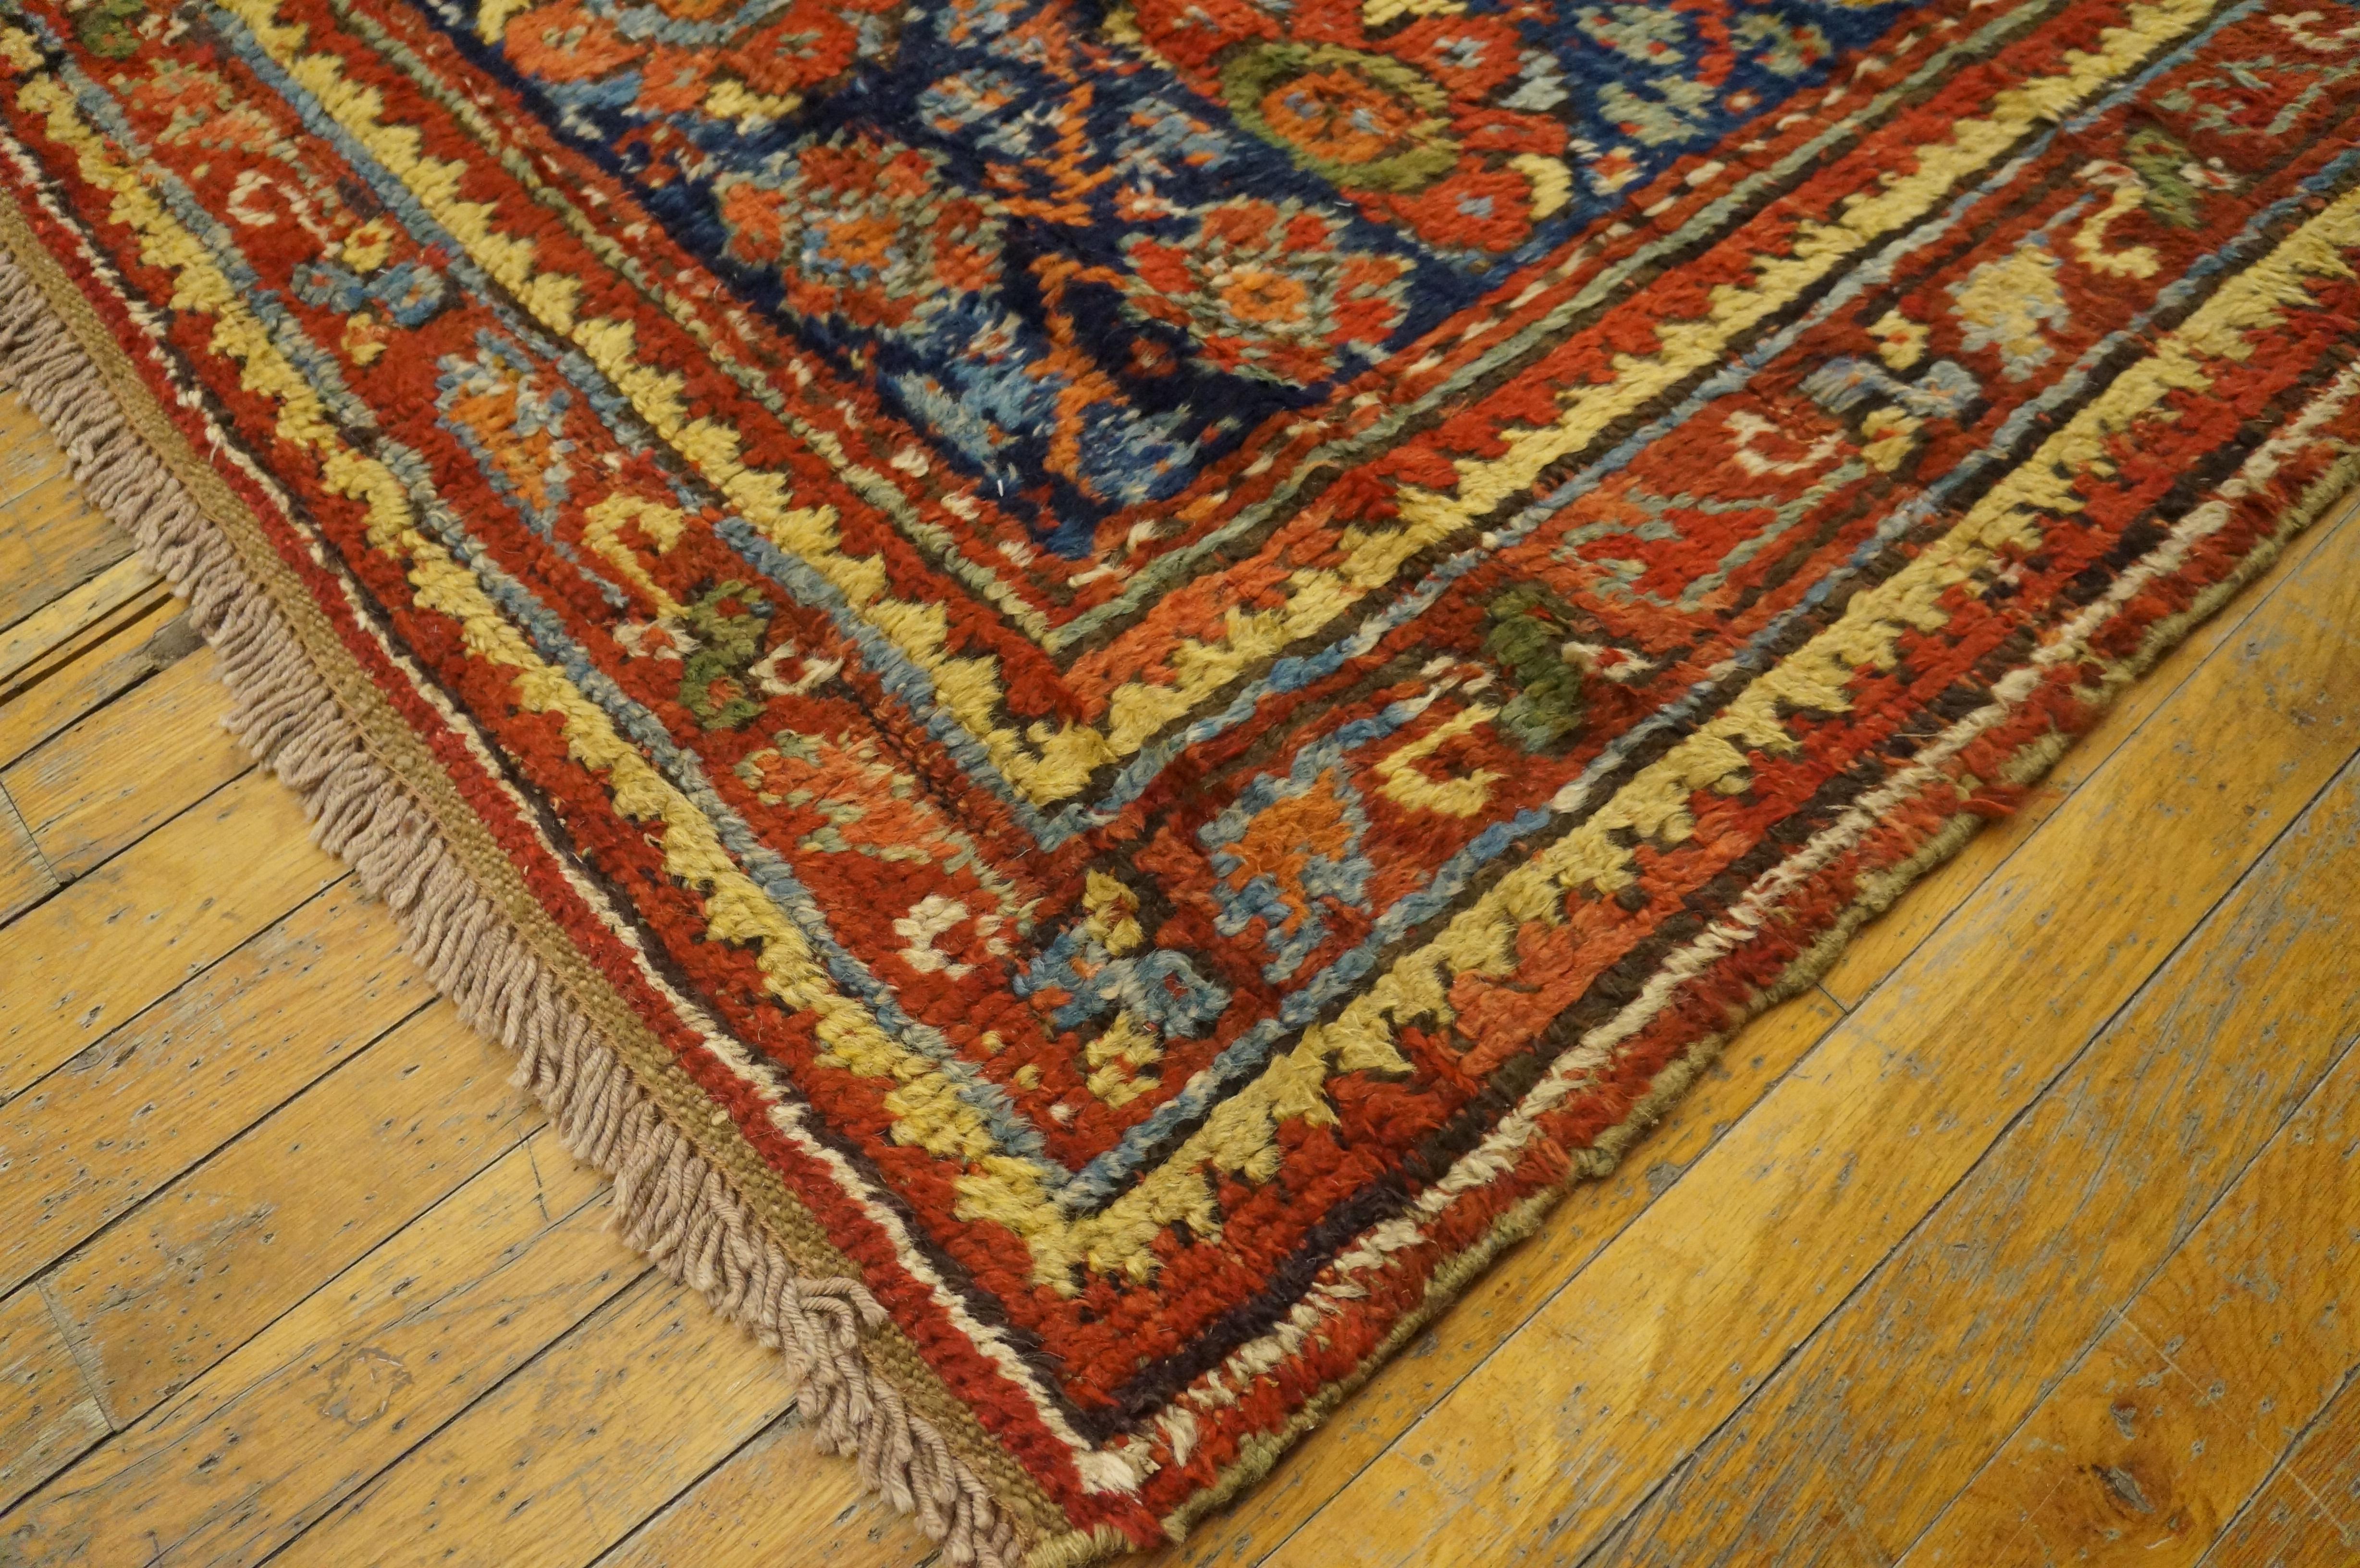 Antique Oushak rug. Measures: 15'6